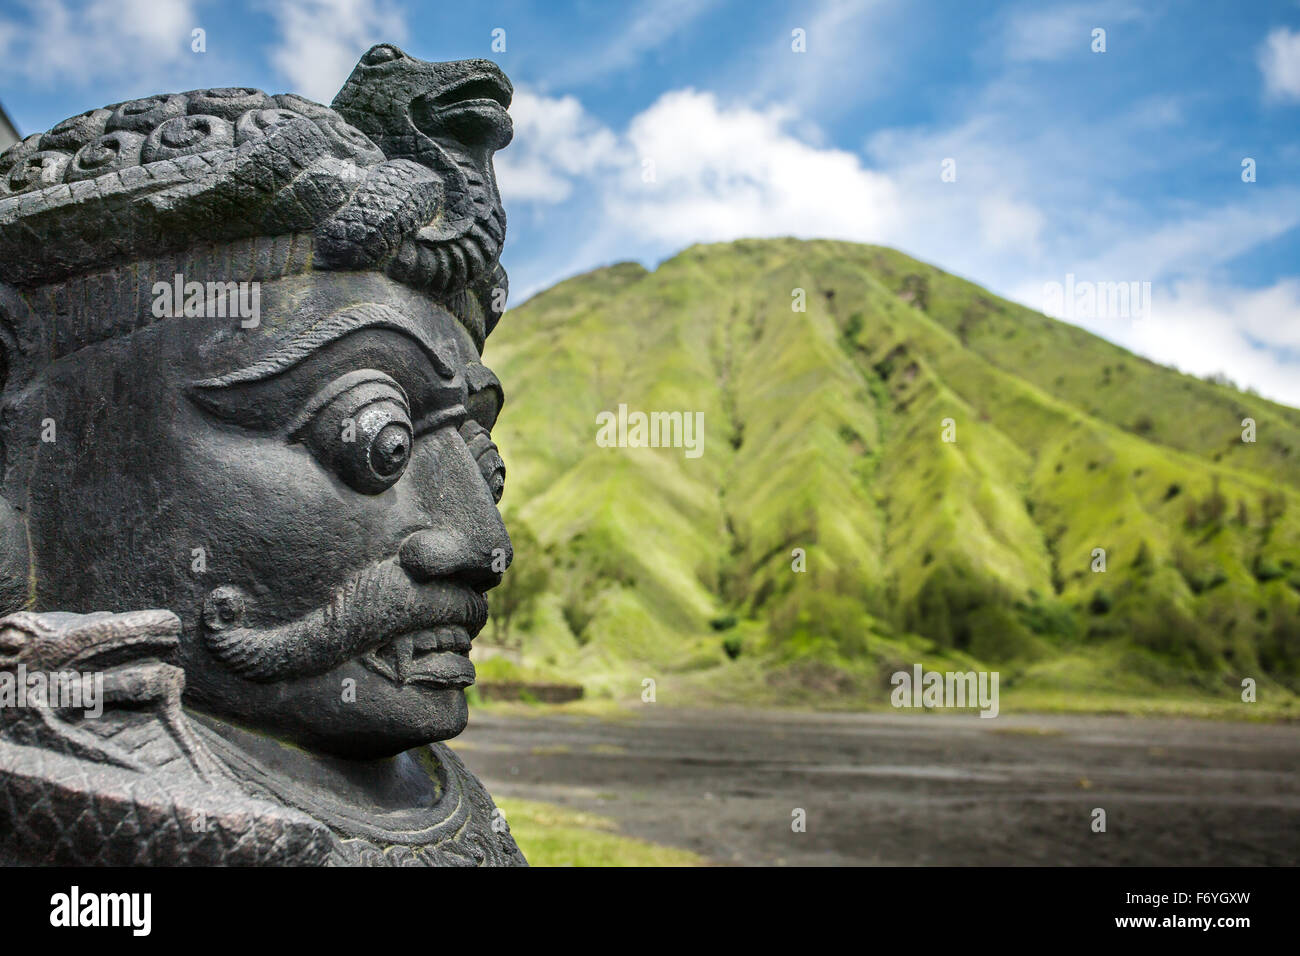 Stone sculpture on entrance of Bentar Candi and Batok volcano in Bromo Tengger Semeru National Park, East Java, Indonesia Stock Photo